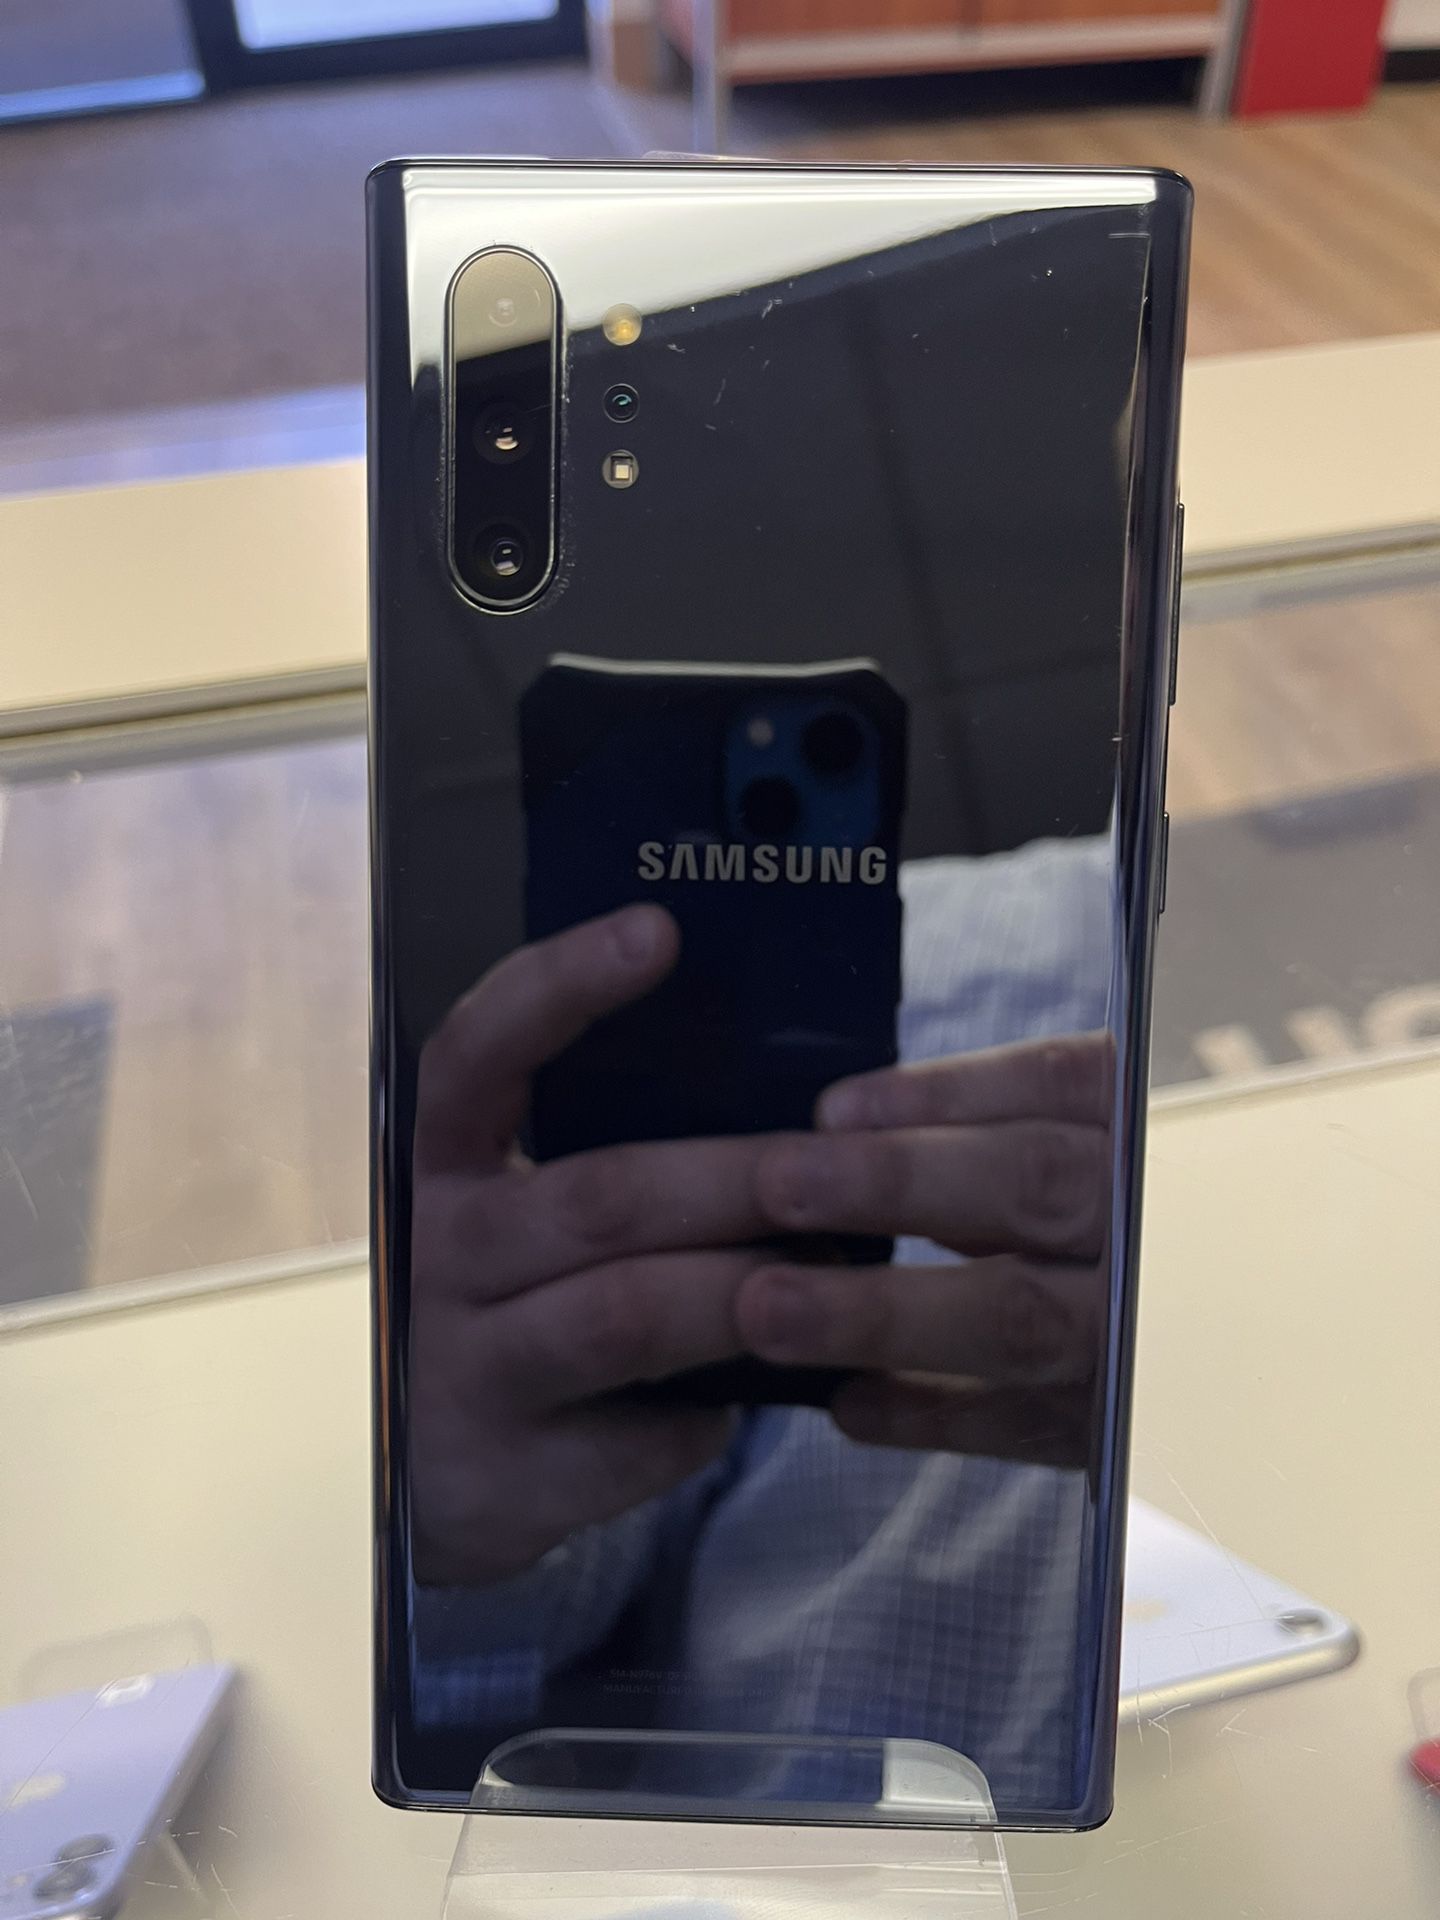 Samsung Galaxy Note10+